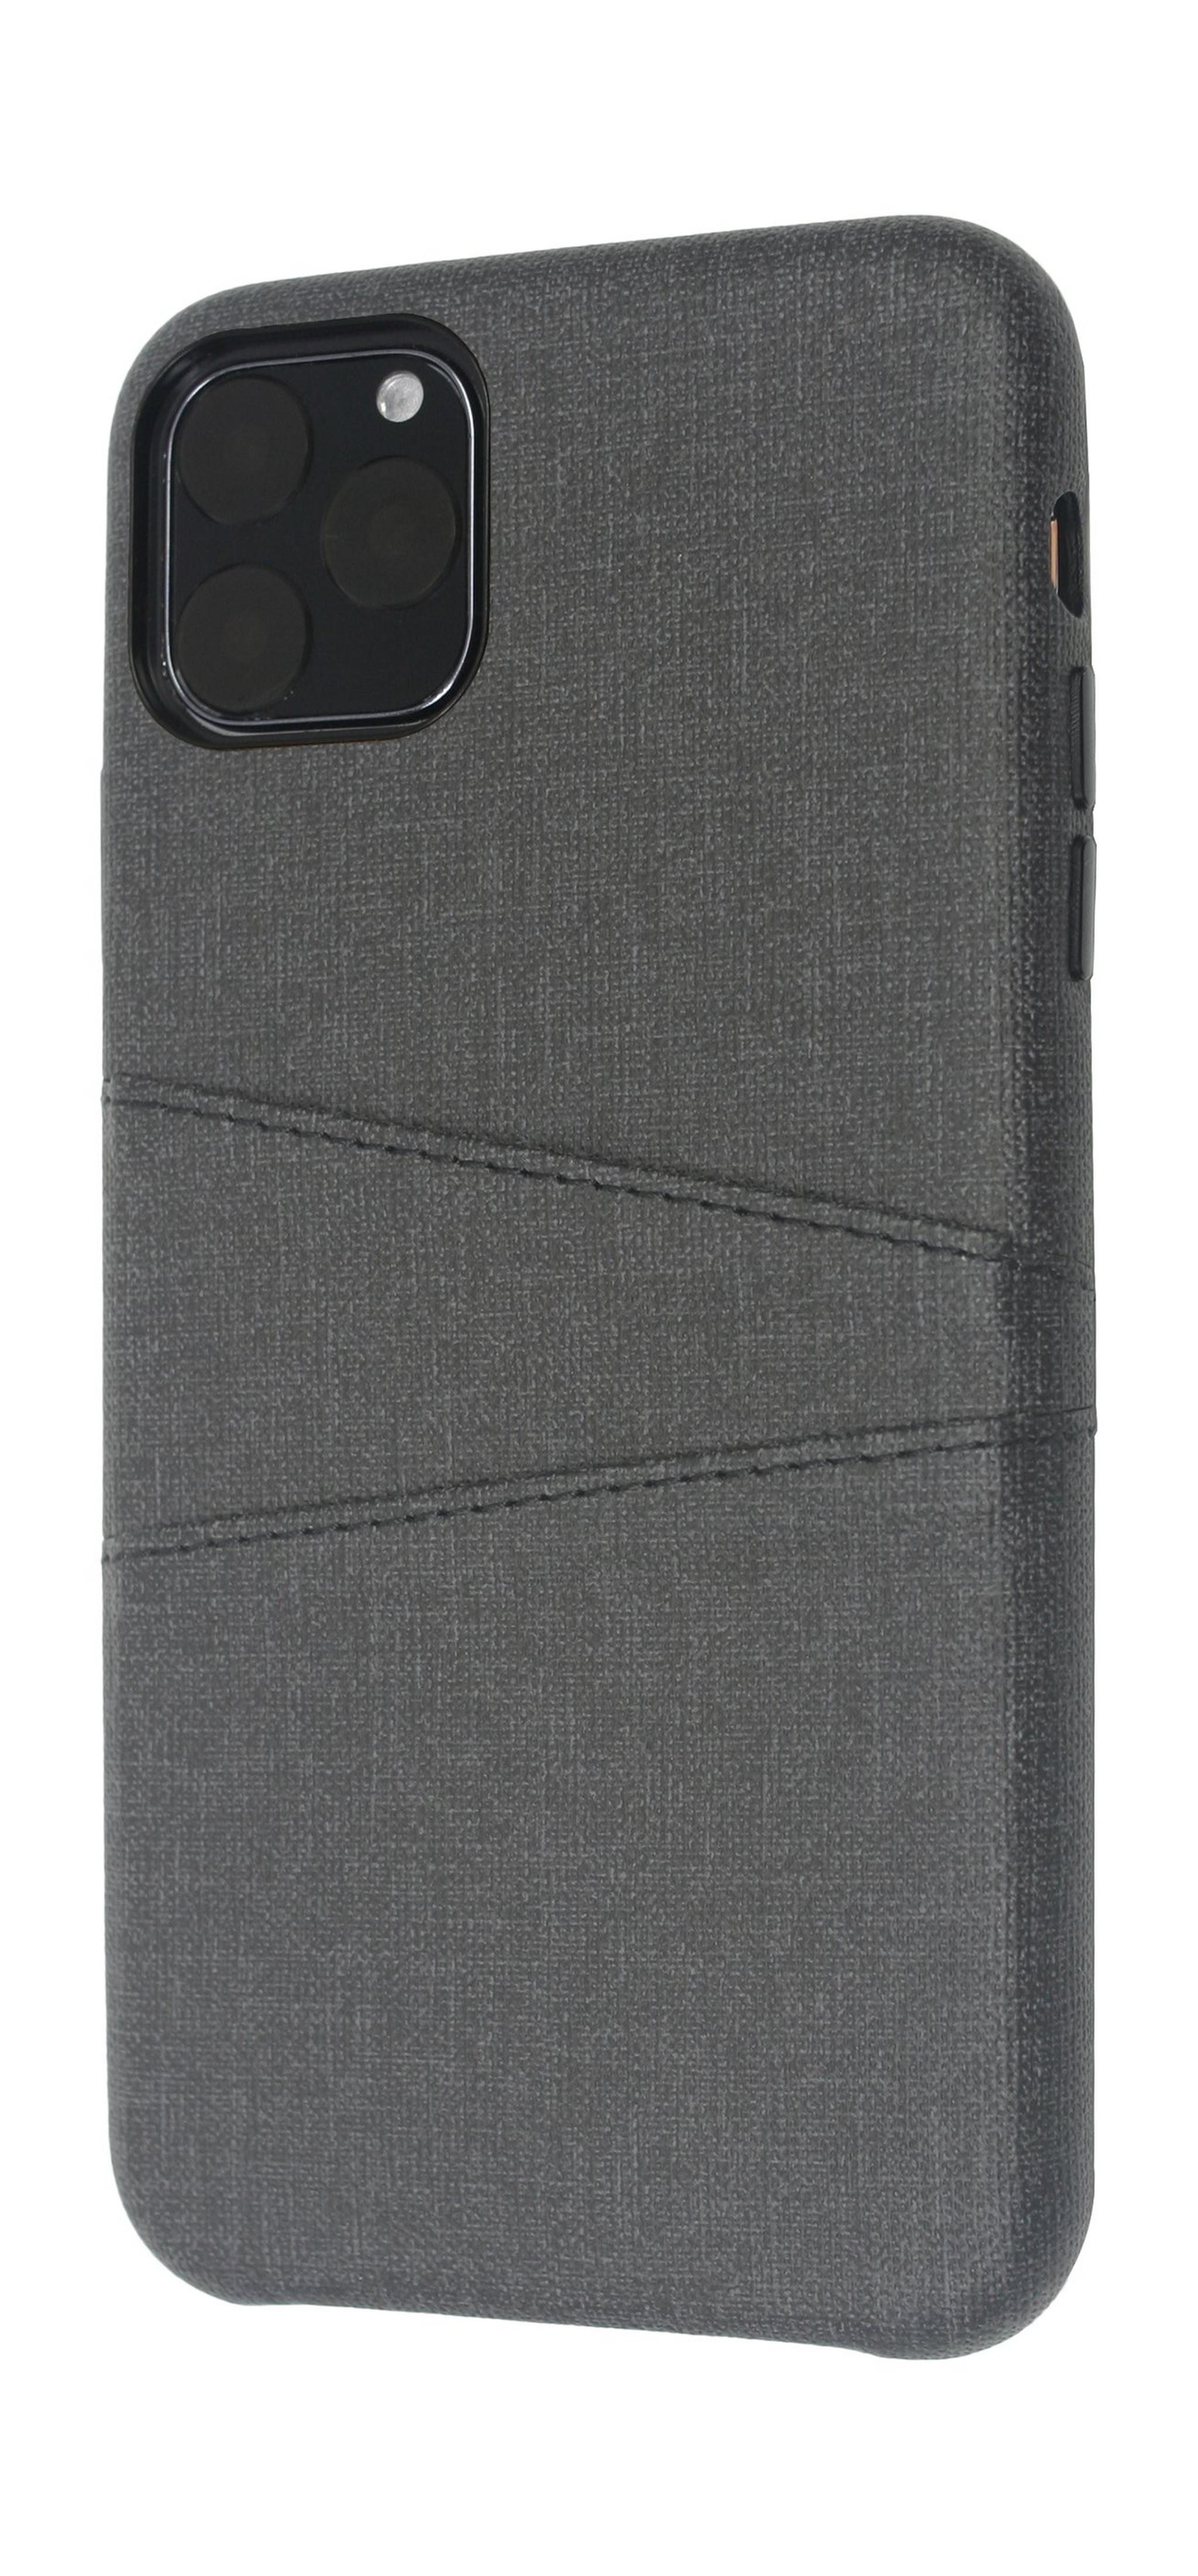 EQ iPhone 11 Pro Max Blank Pocket Back Case - Black